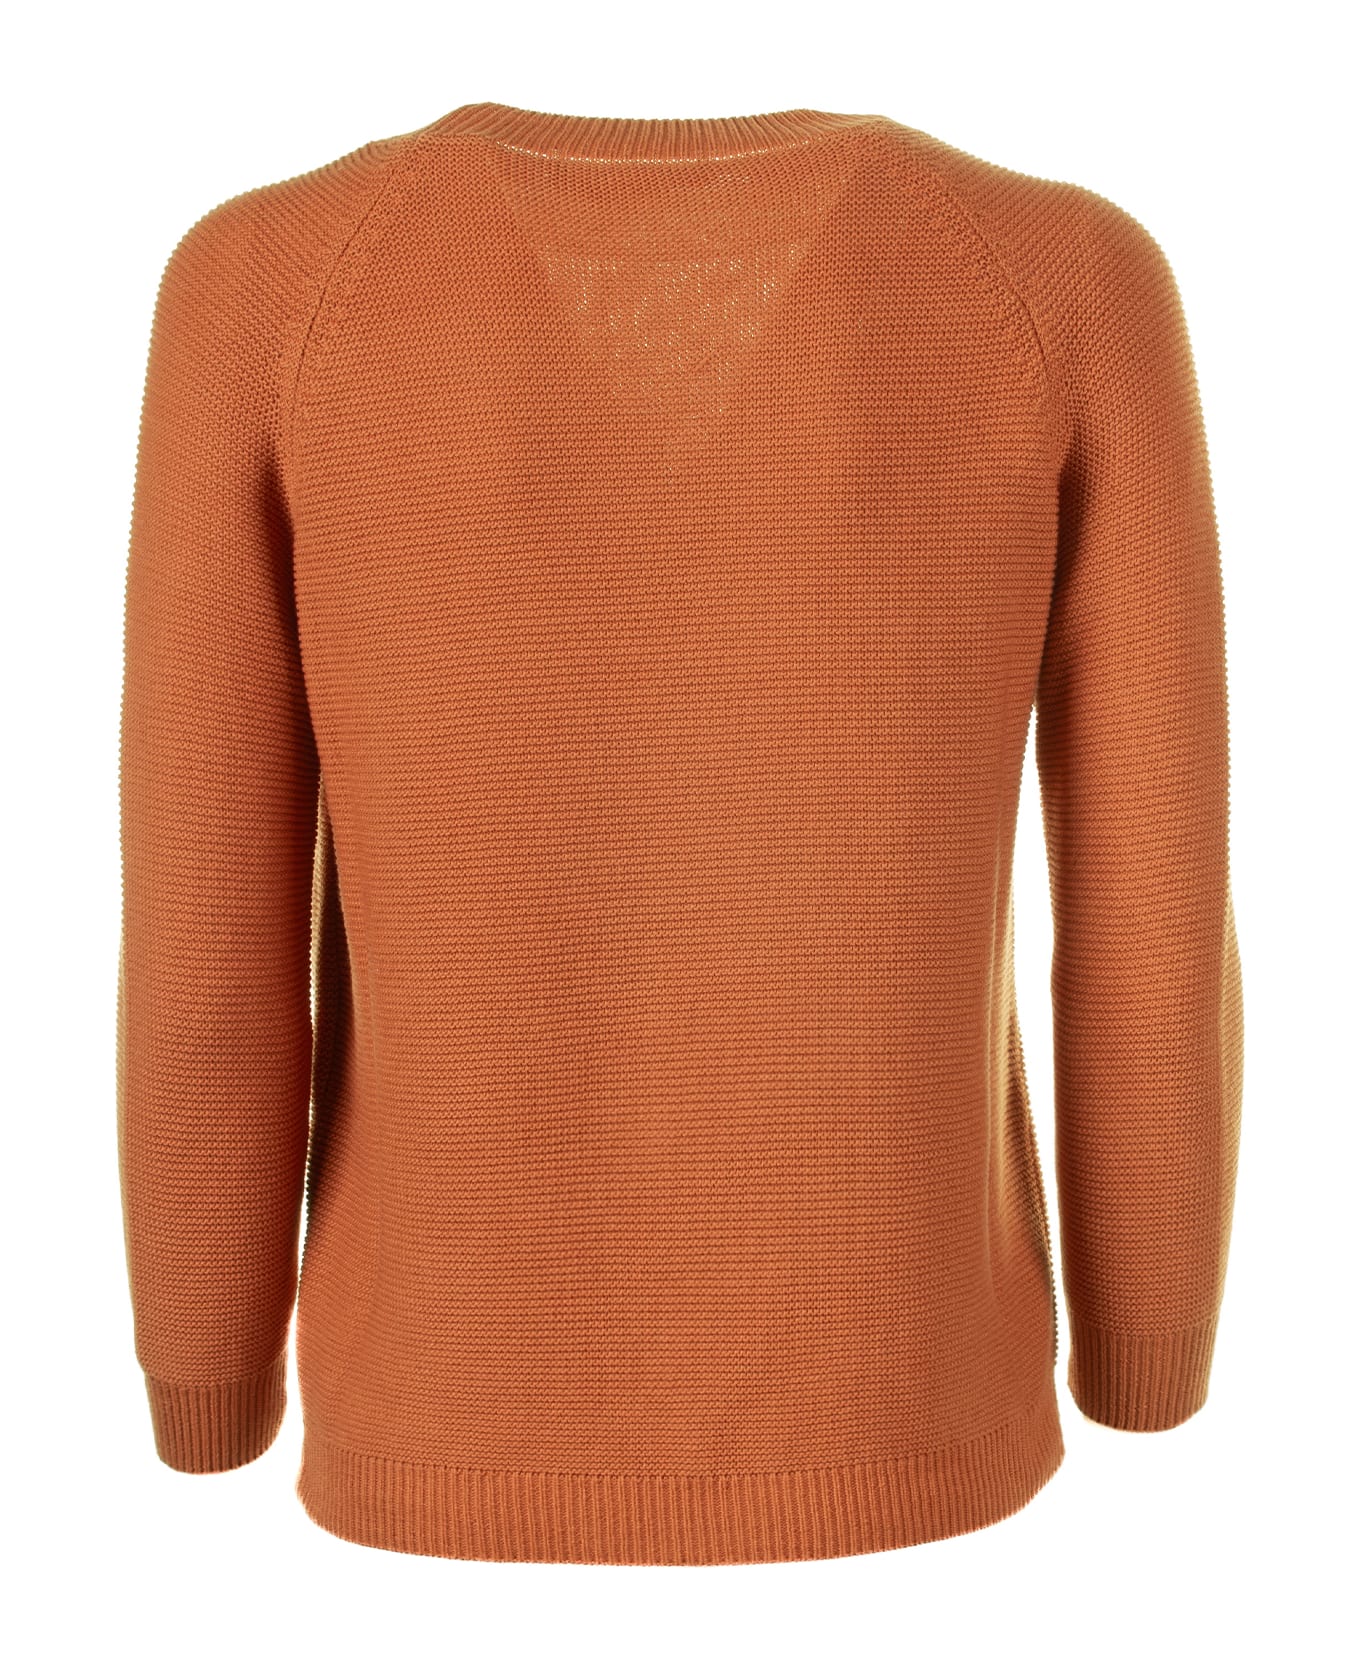 Weekend Max Mara Soft Orange Cotton Sweater - TULIPANO